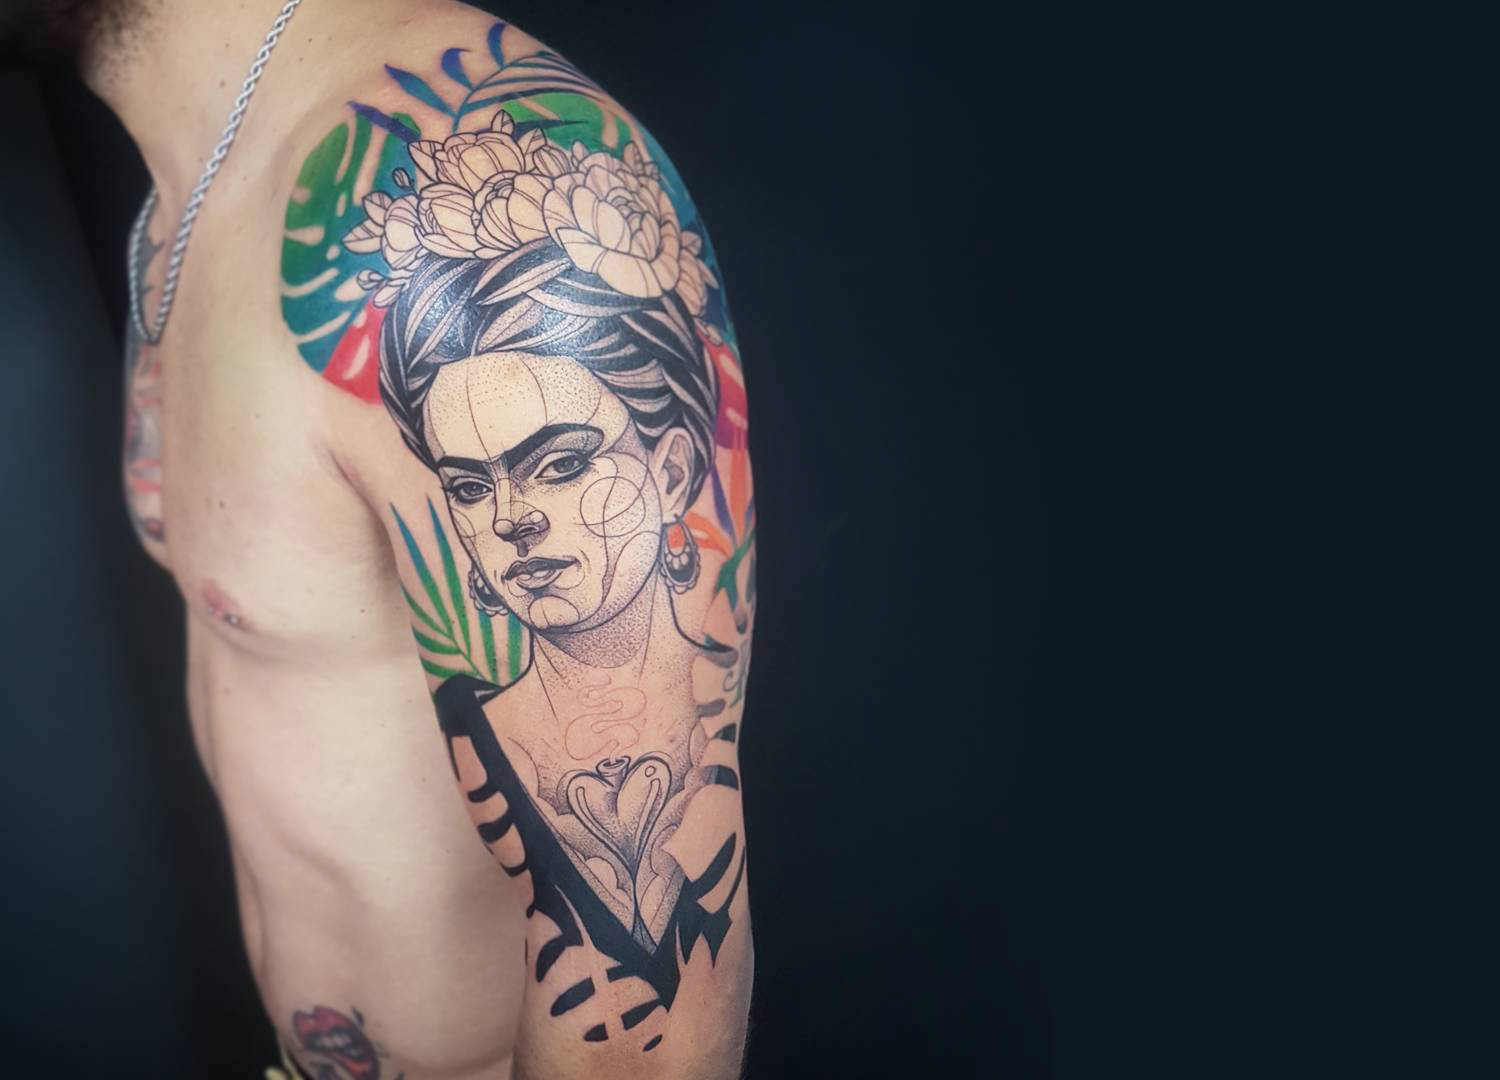 Tattooed portrait of a woman by Kati Berinkey